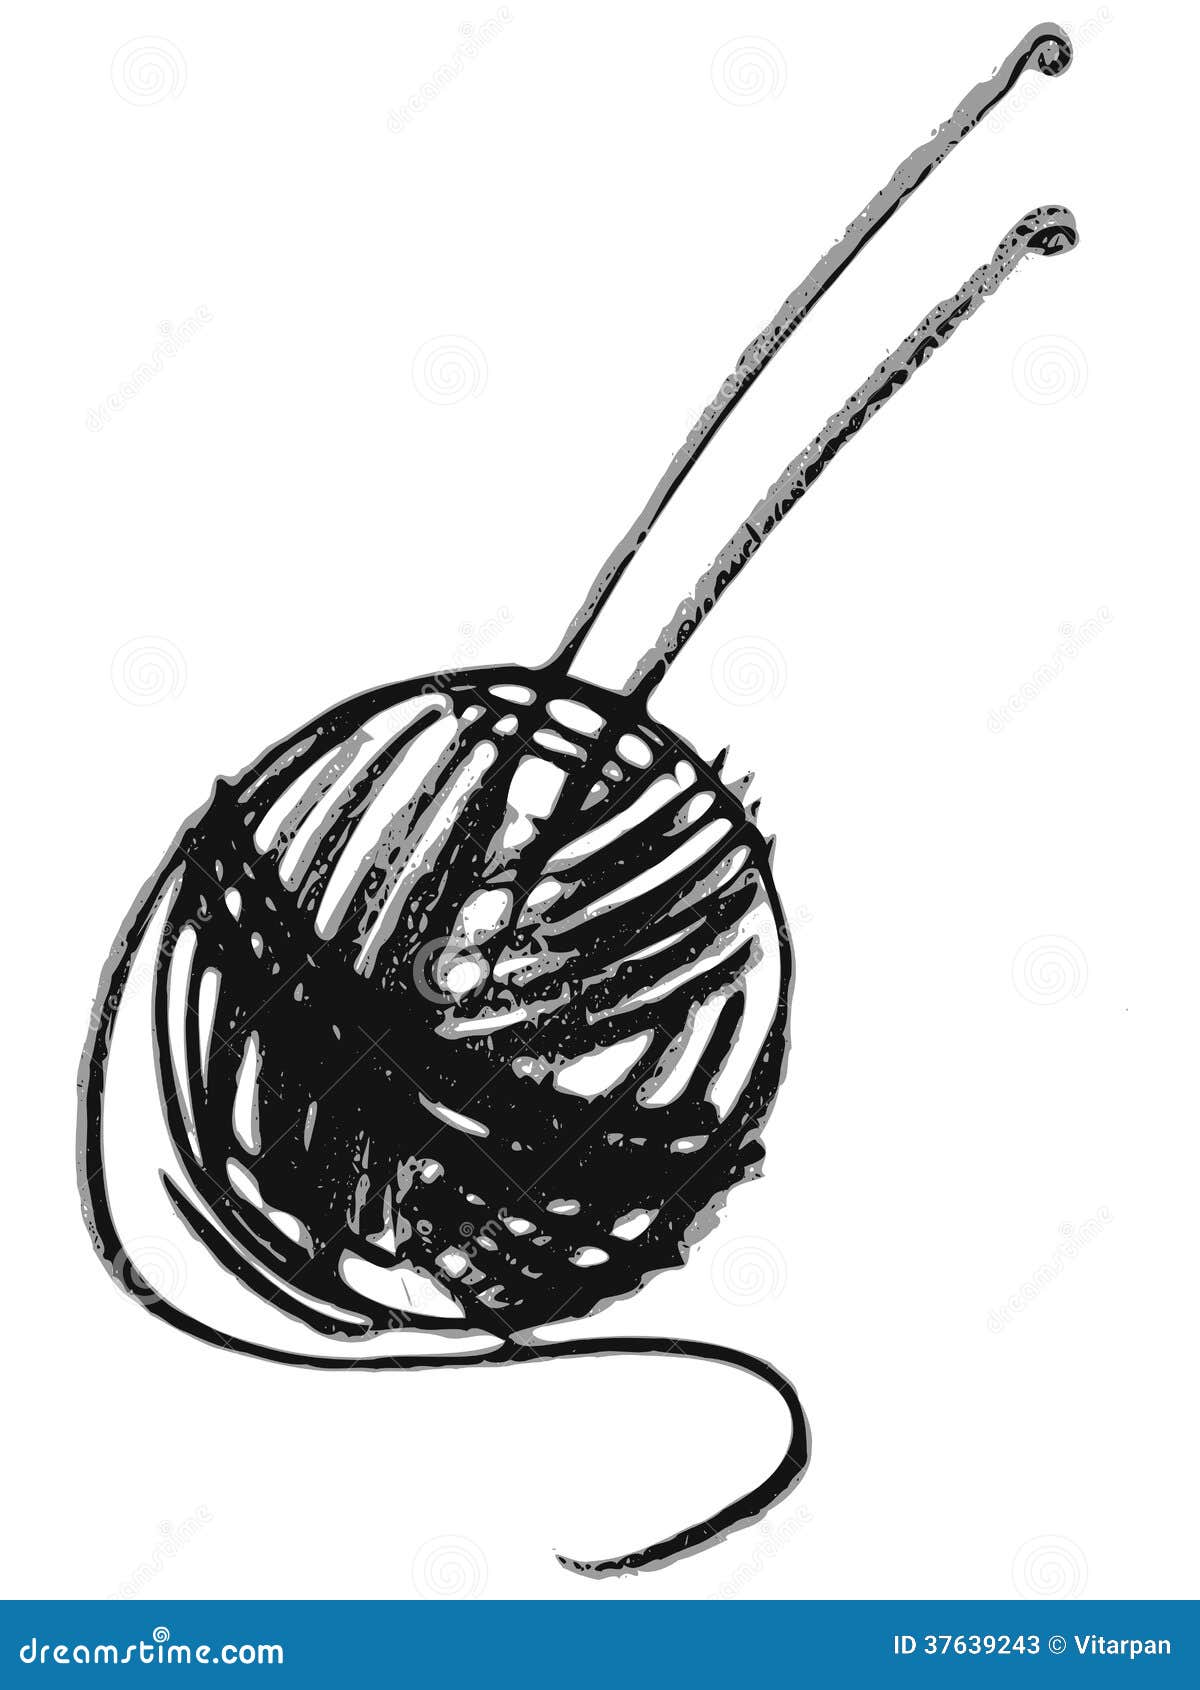 ball of yarn clip art free - photo #37